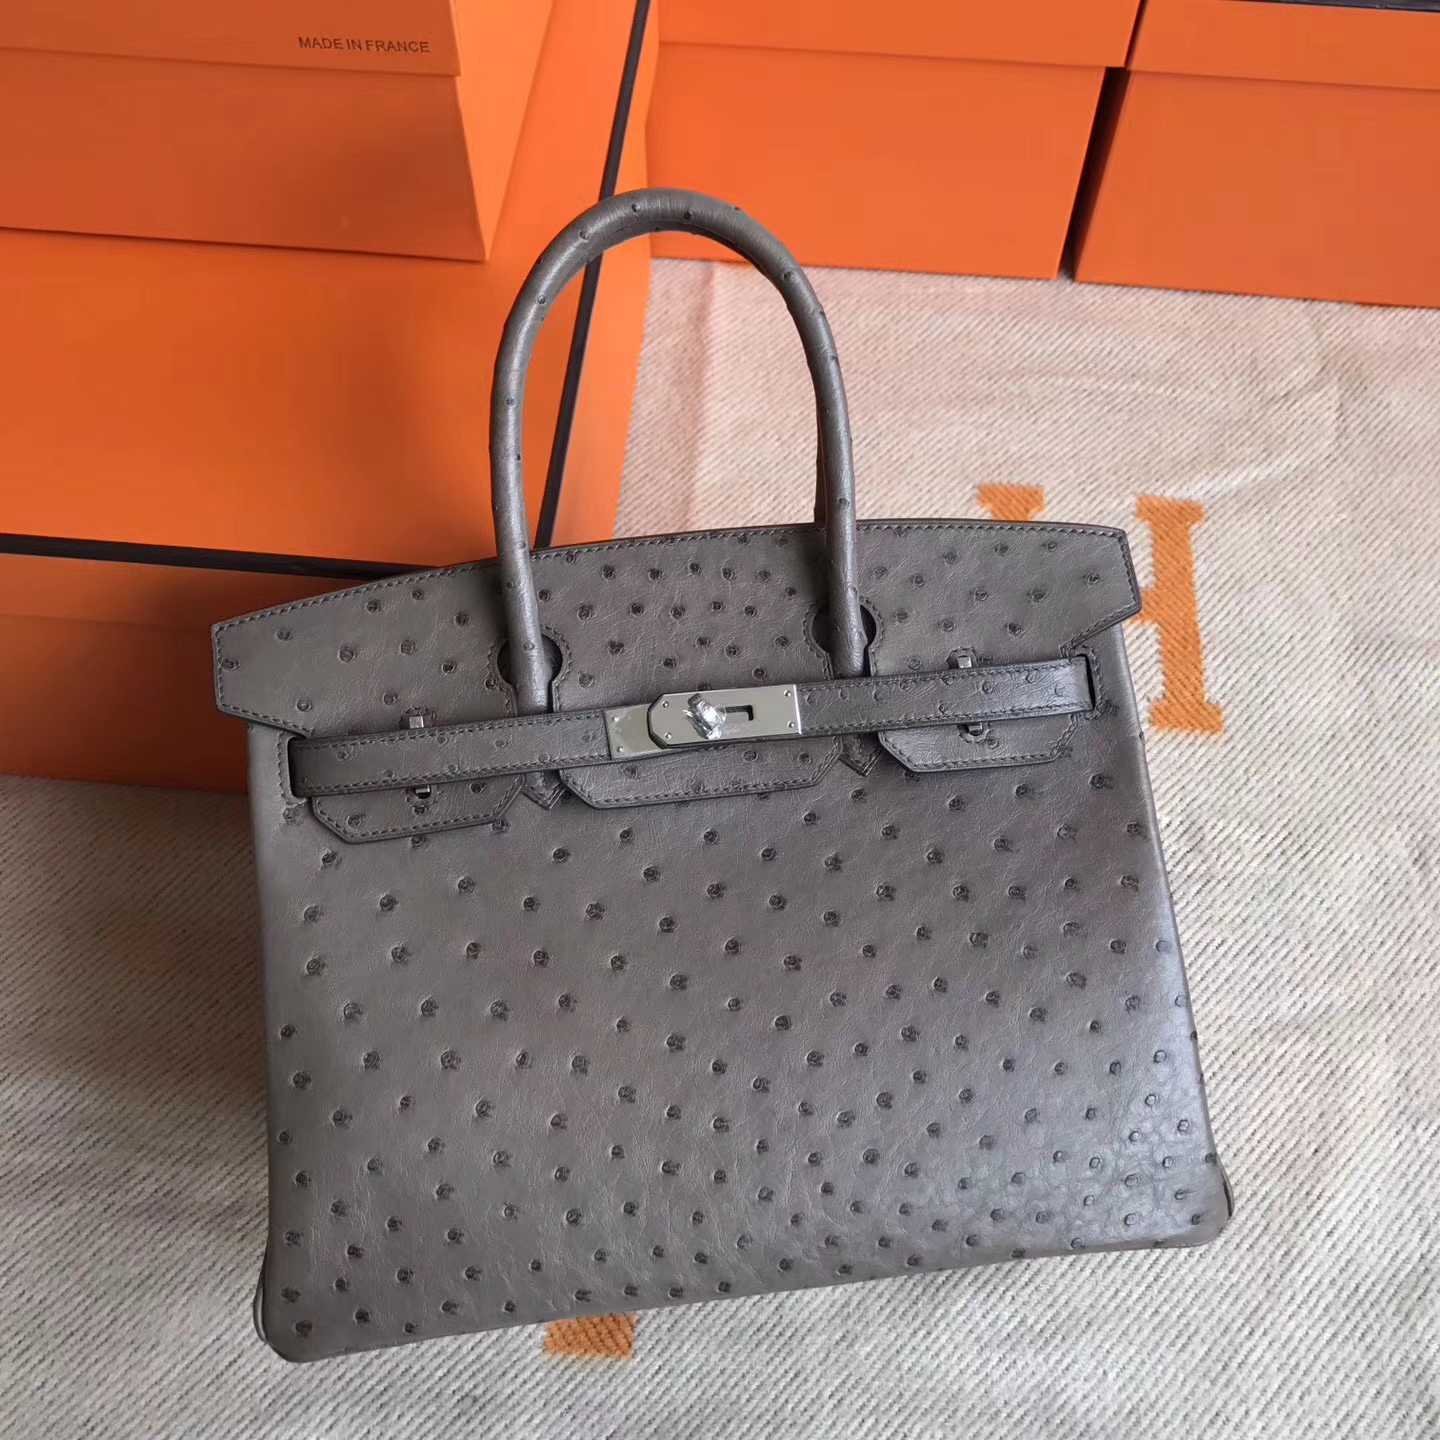 Fashion Hermes Ostrich Leather Birkin30cm Handbag in Mousse Grey Silver Hardware